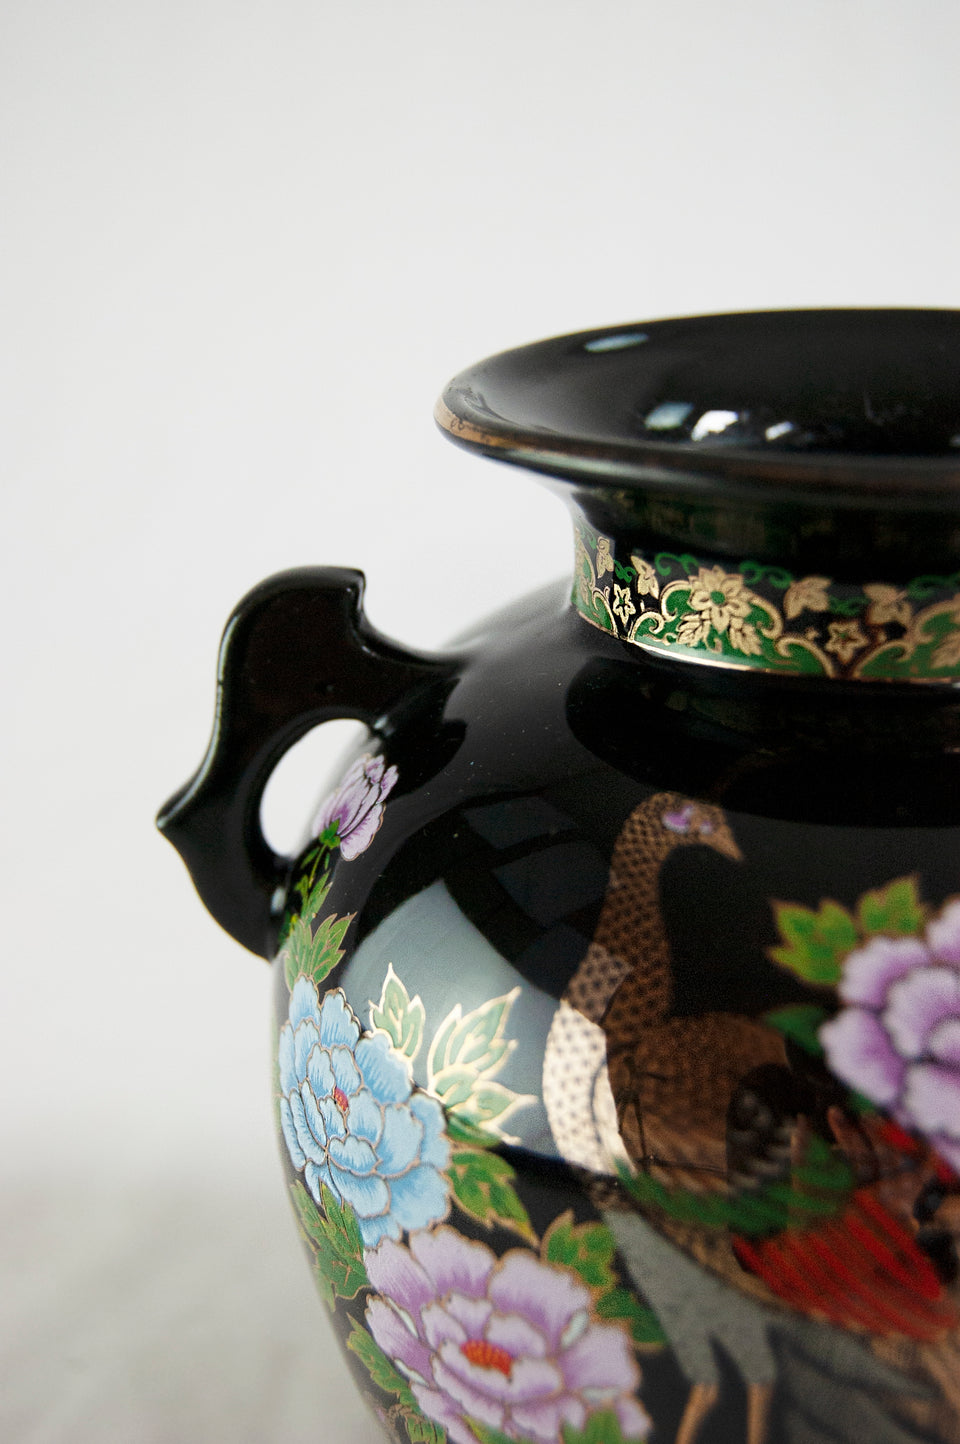 Chinese Antique Vase